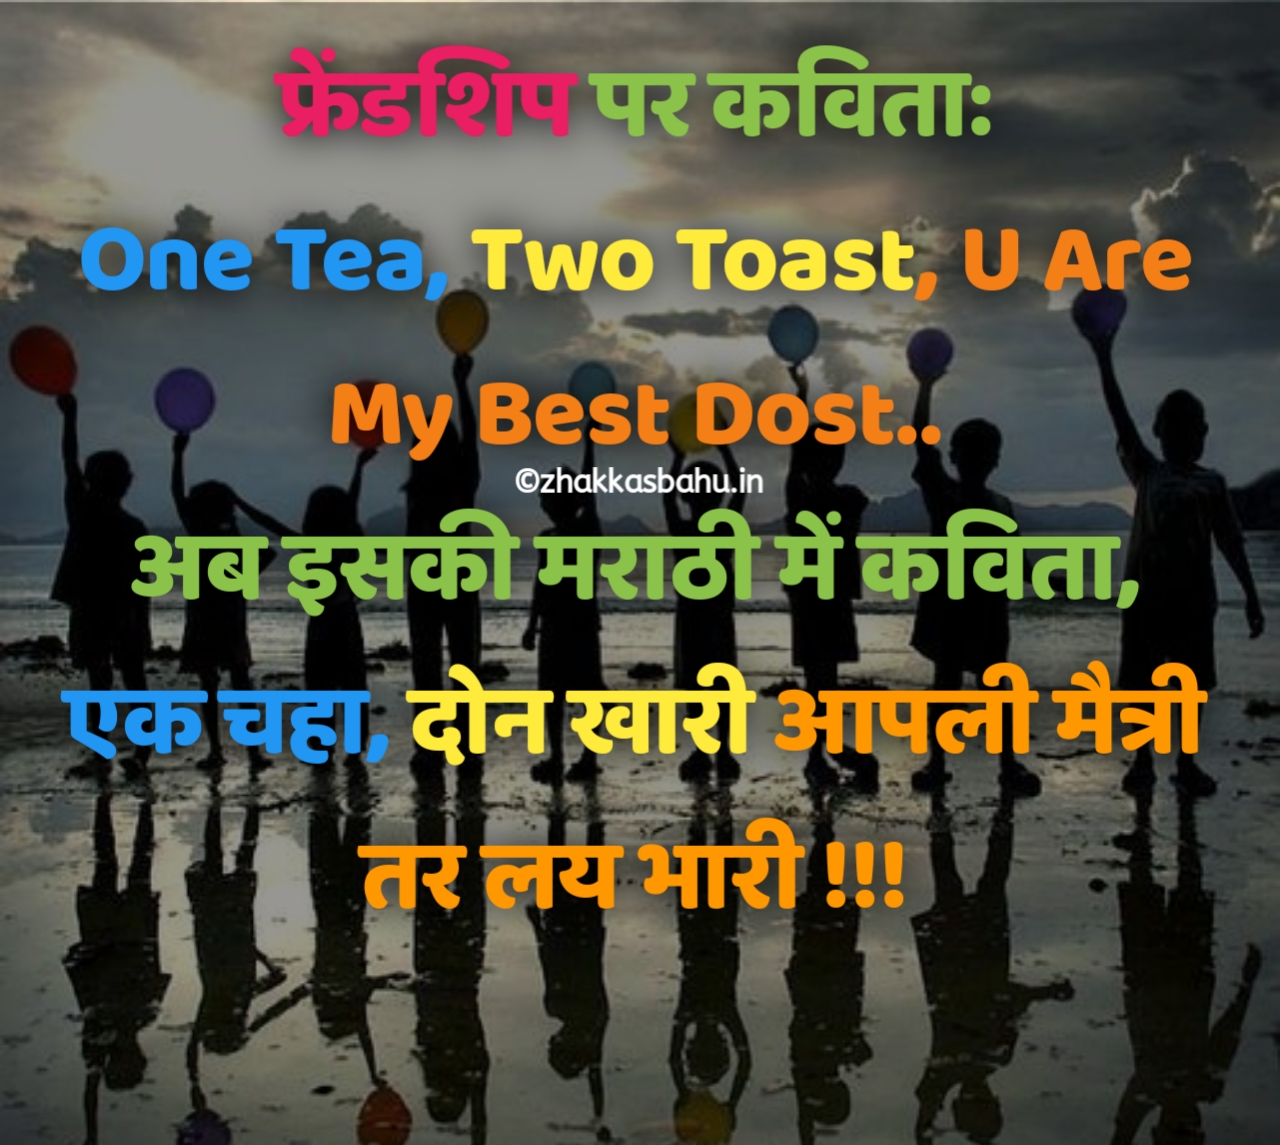 Friendship Quotes in Marathi Images | Friendship Status in Marathi Images